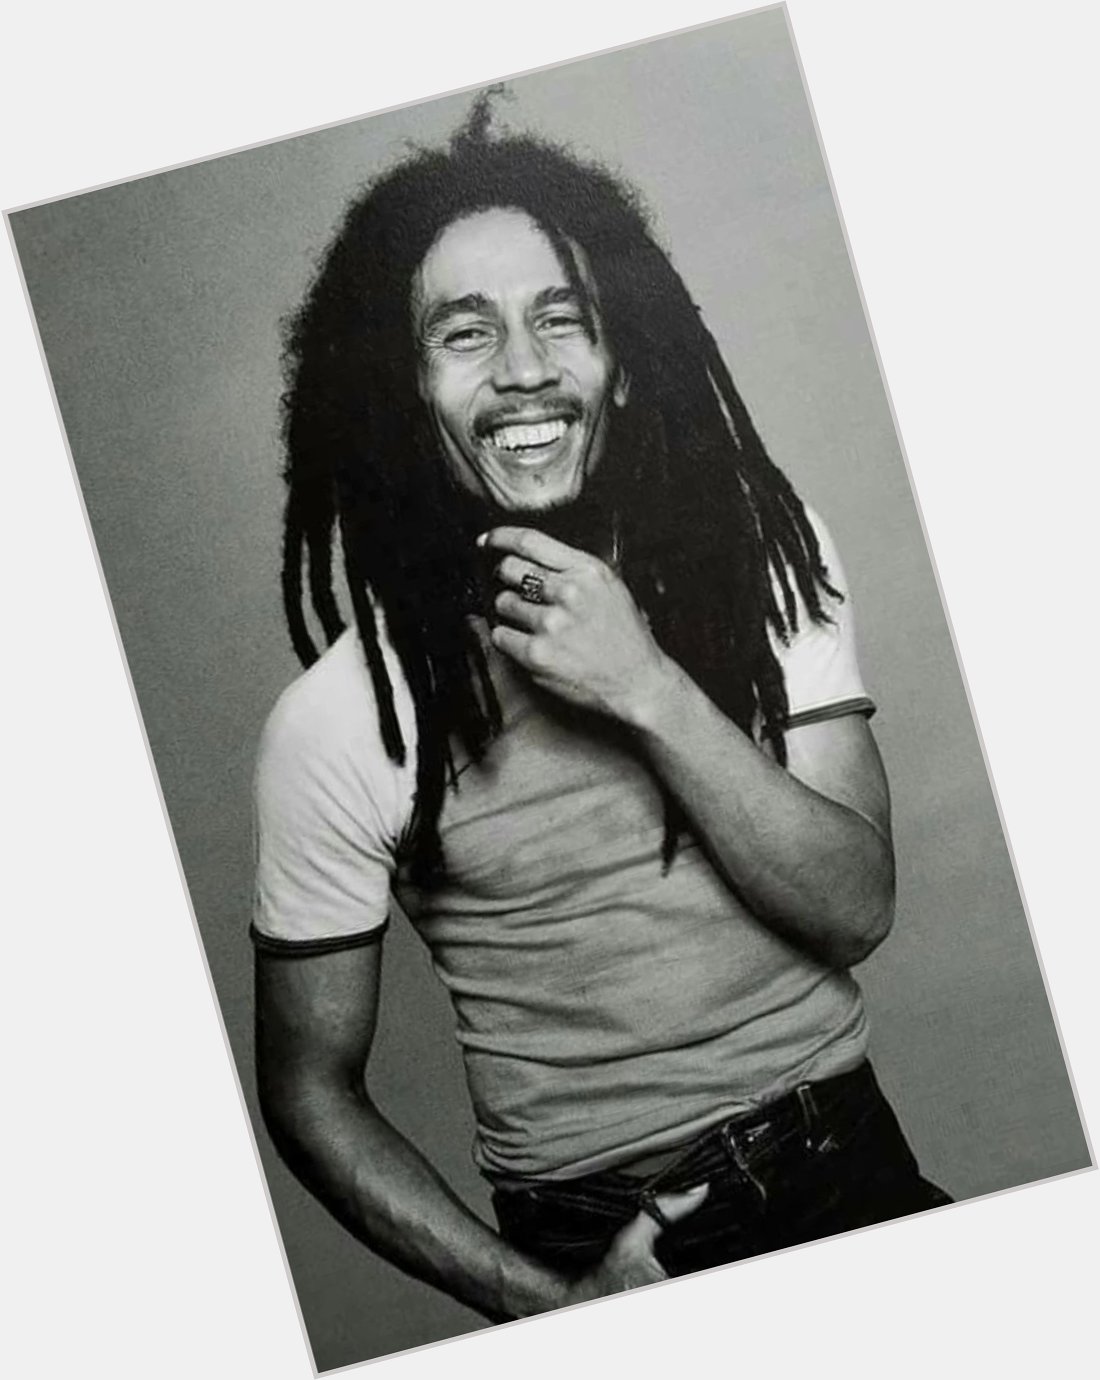 Bob Marley\s legacy lives on ,happy 75th birthday. 